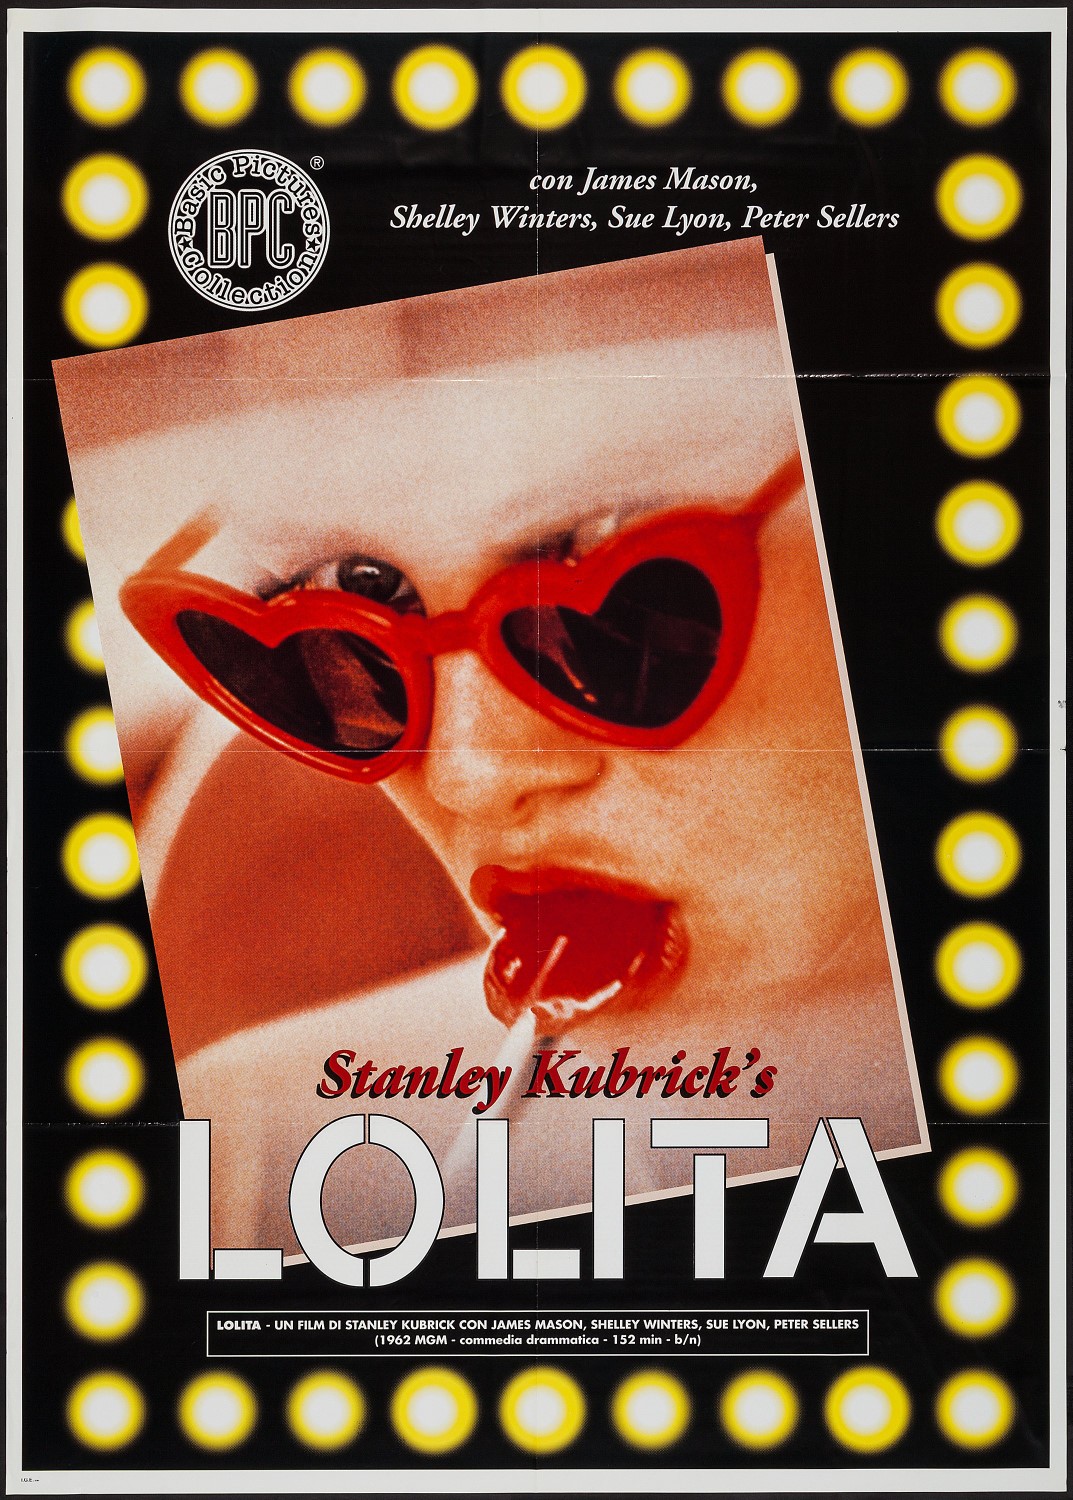 Image result for lolita sue lyon film poster"